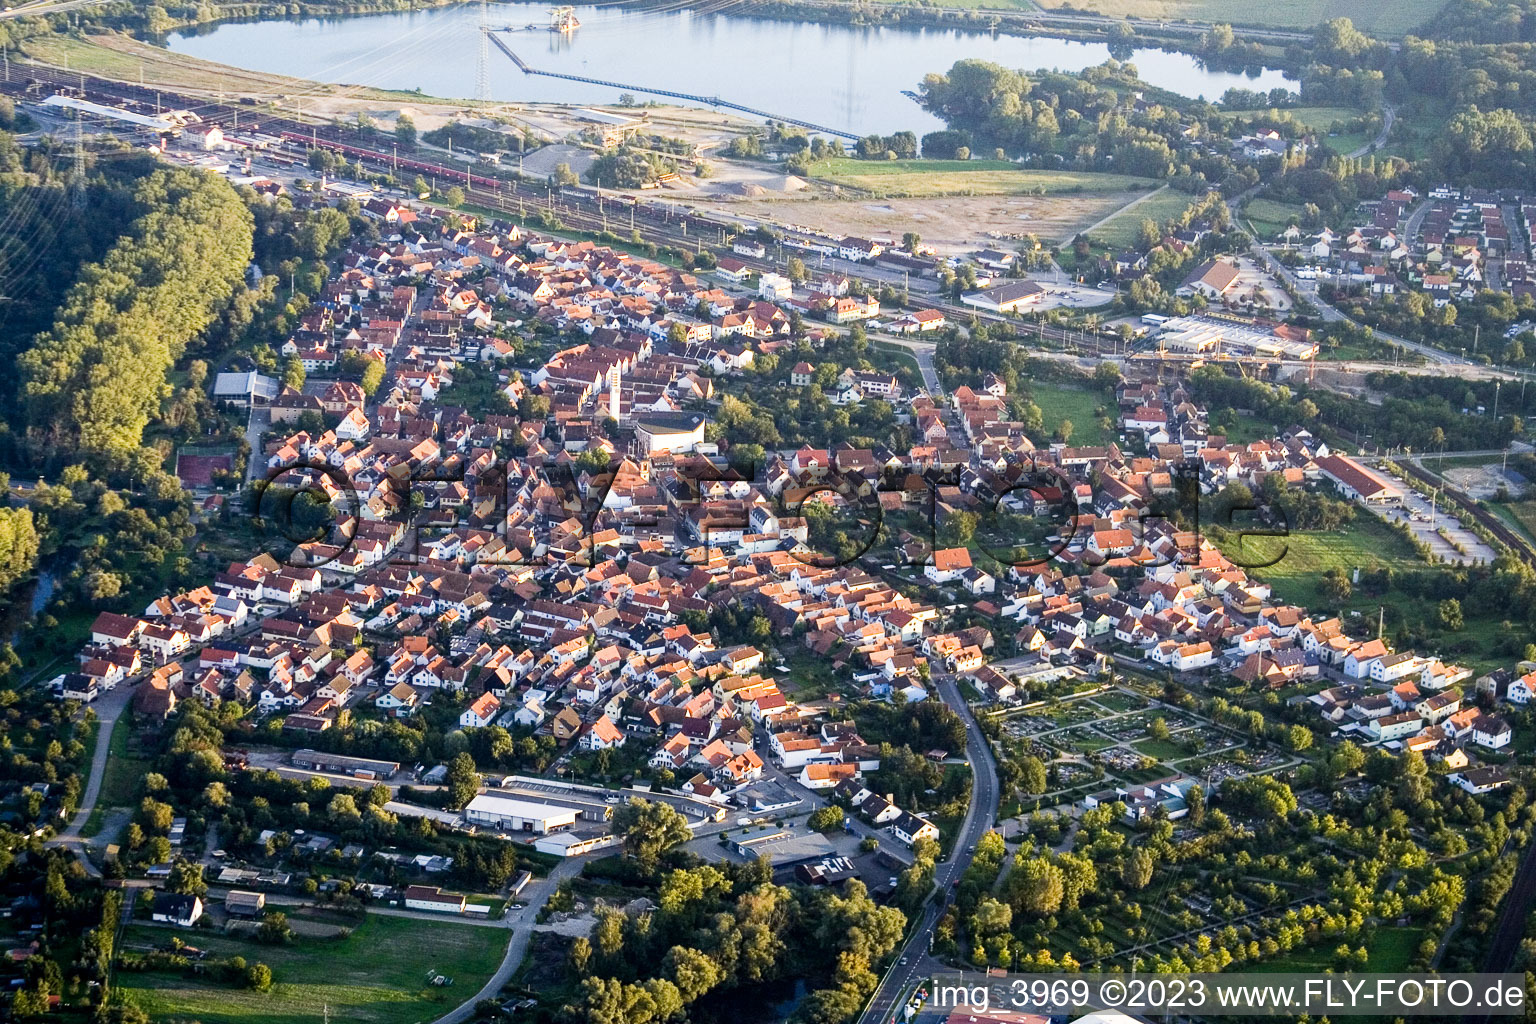 Aerial view of Wörth am Rhein in the state Rhineland-Palatinate, Germany